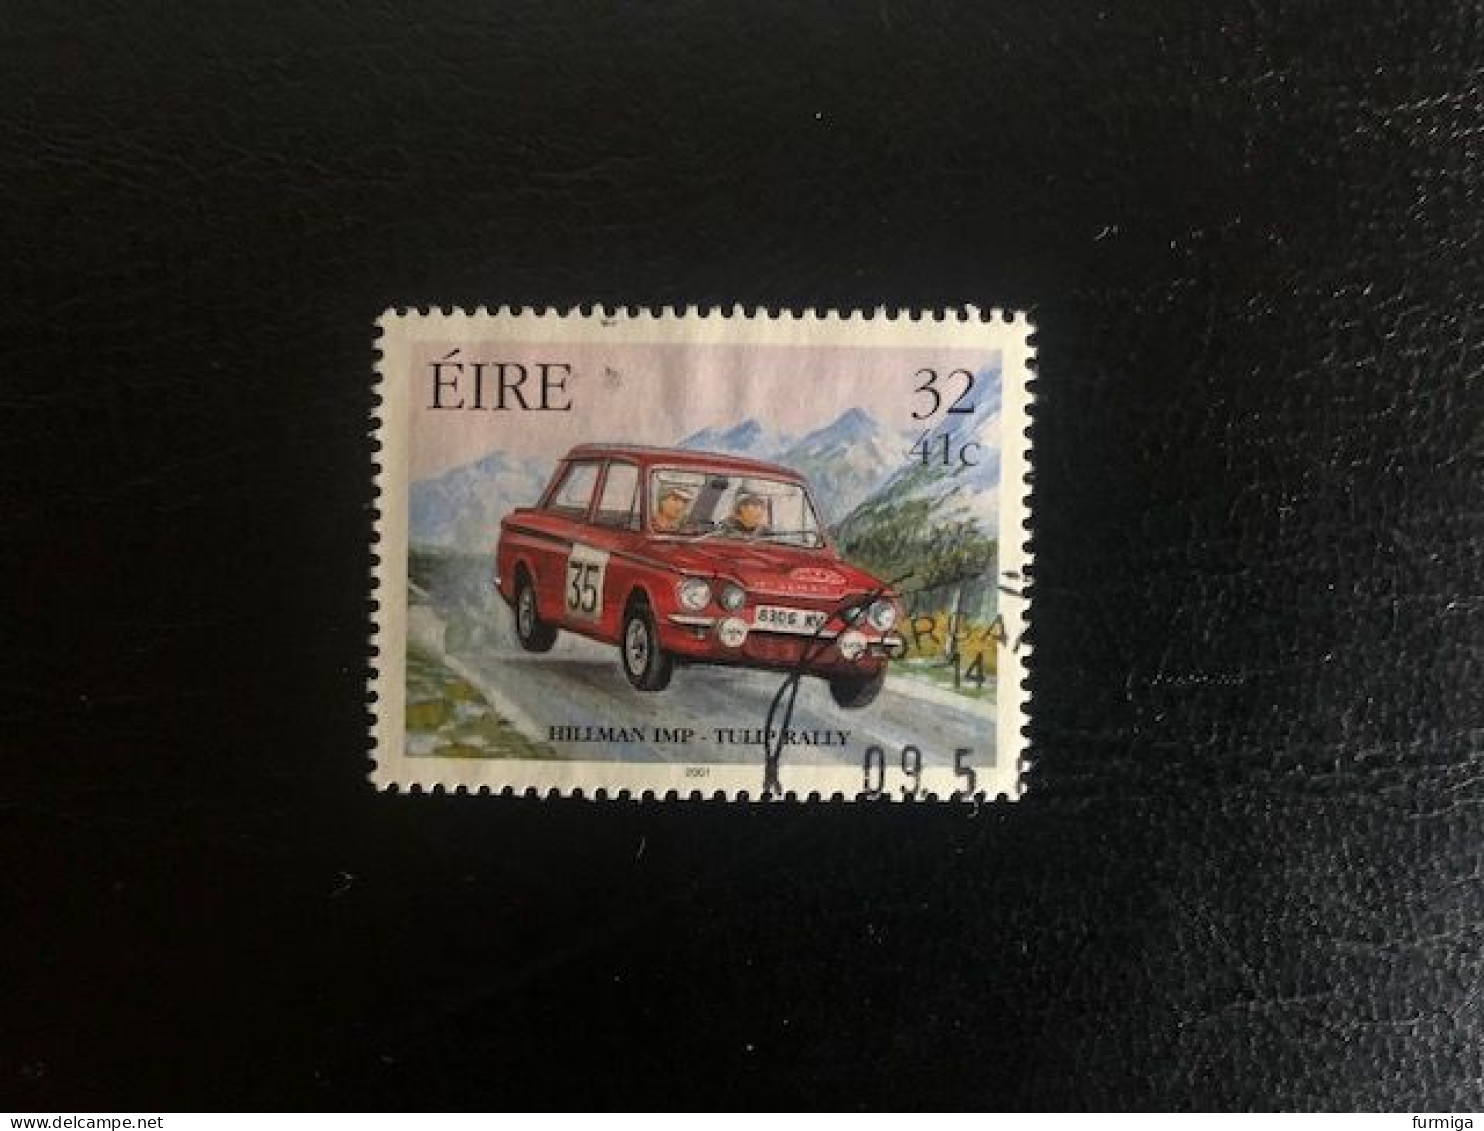 Irland EIRE 2001 - 1324 - Fein RUND Gestempelt - Fine Used LUX Postmark - Used Stamps